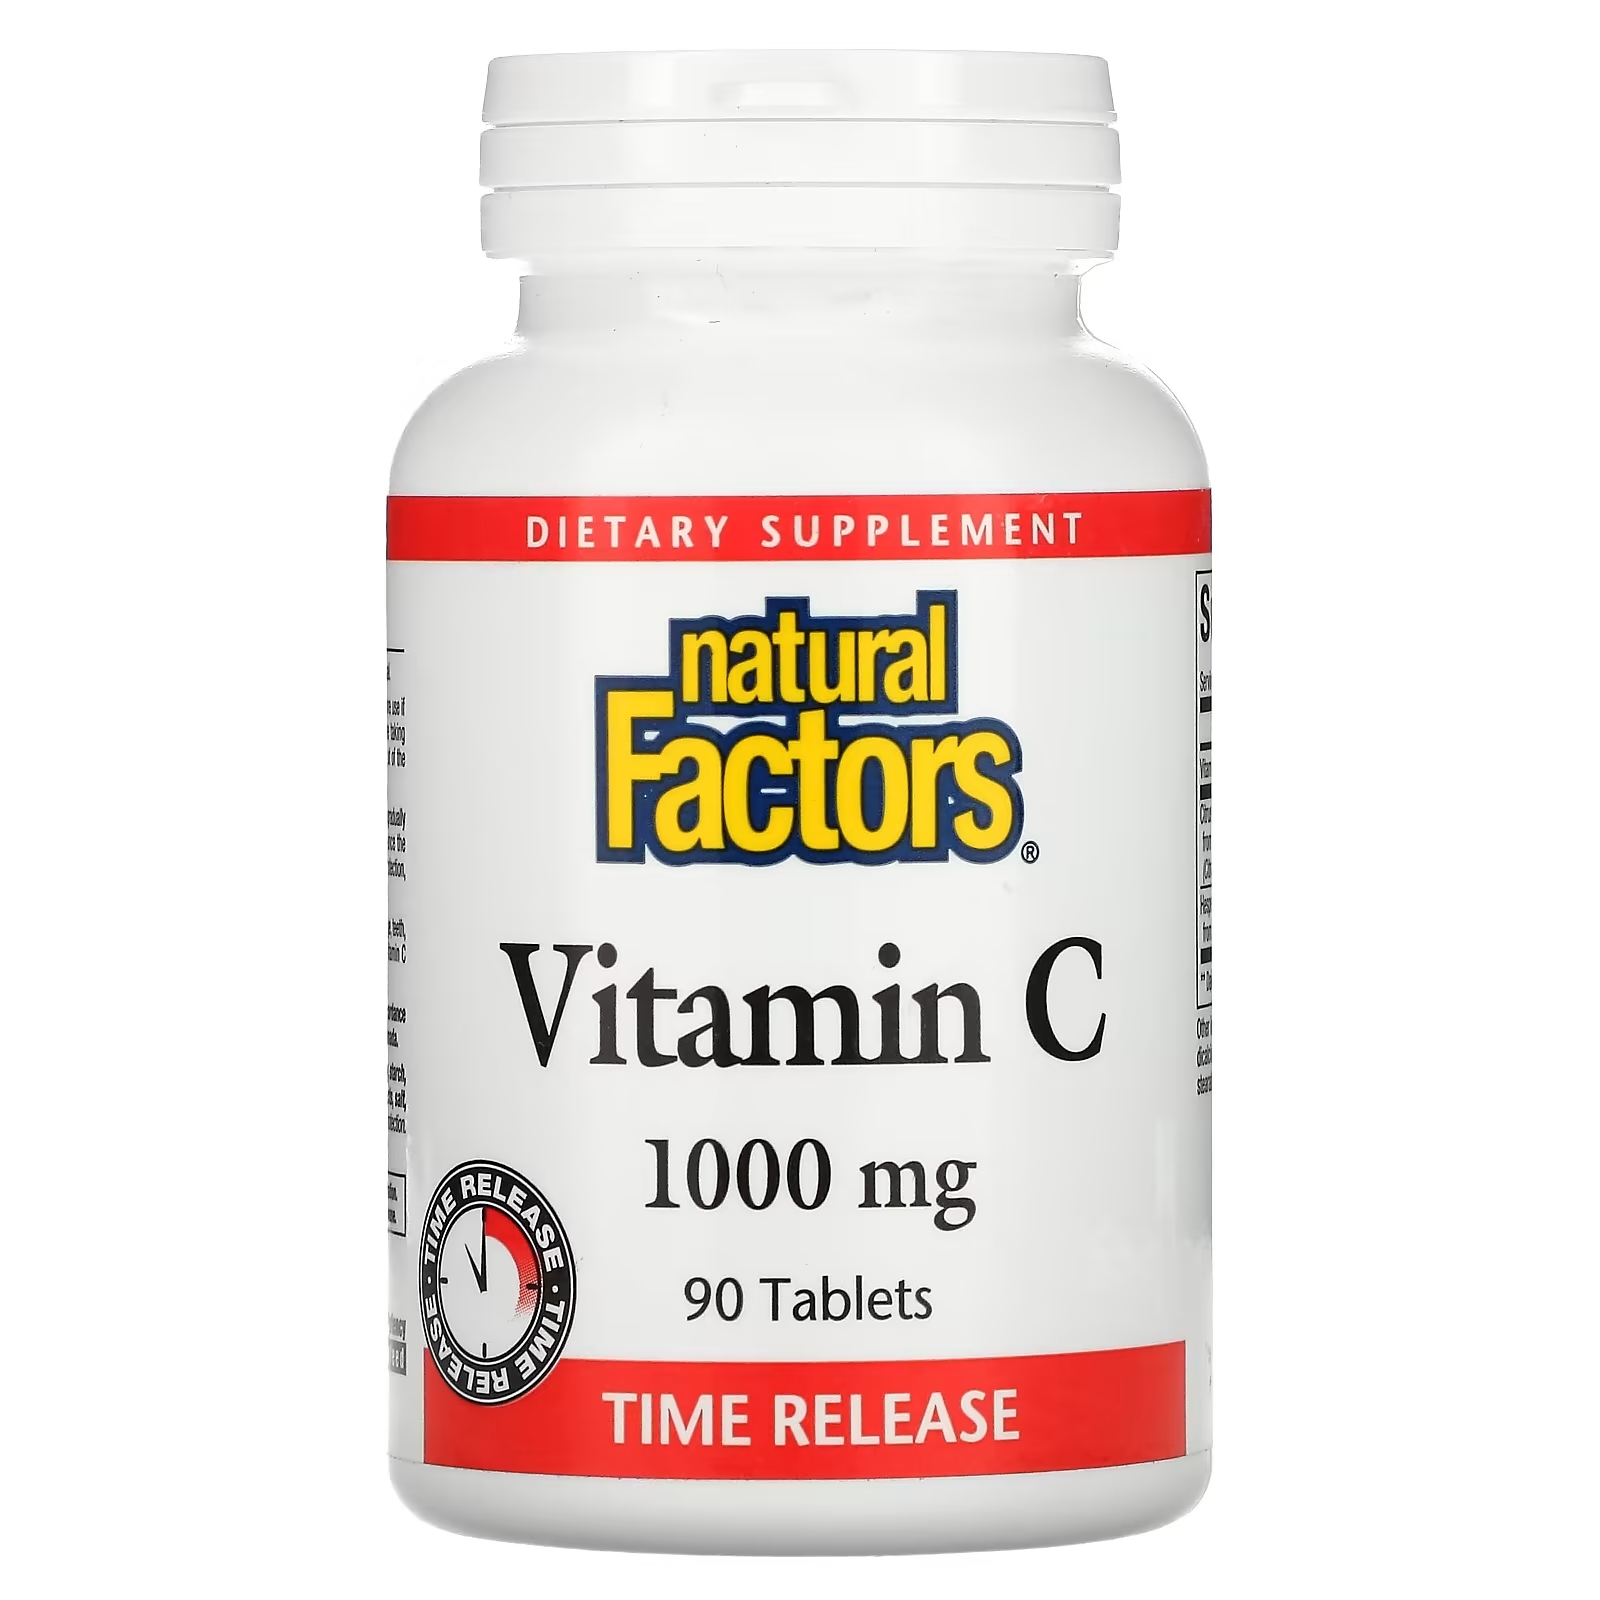 Natural Factors витамин C 1000 мг с медленным высвобождением, 90 таблеток natural factors same дисульфат тозилат 200 мг 30 таблеток с медленным высвобождением